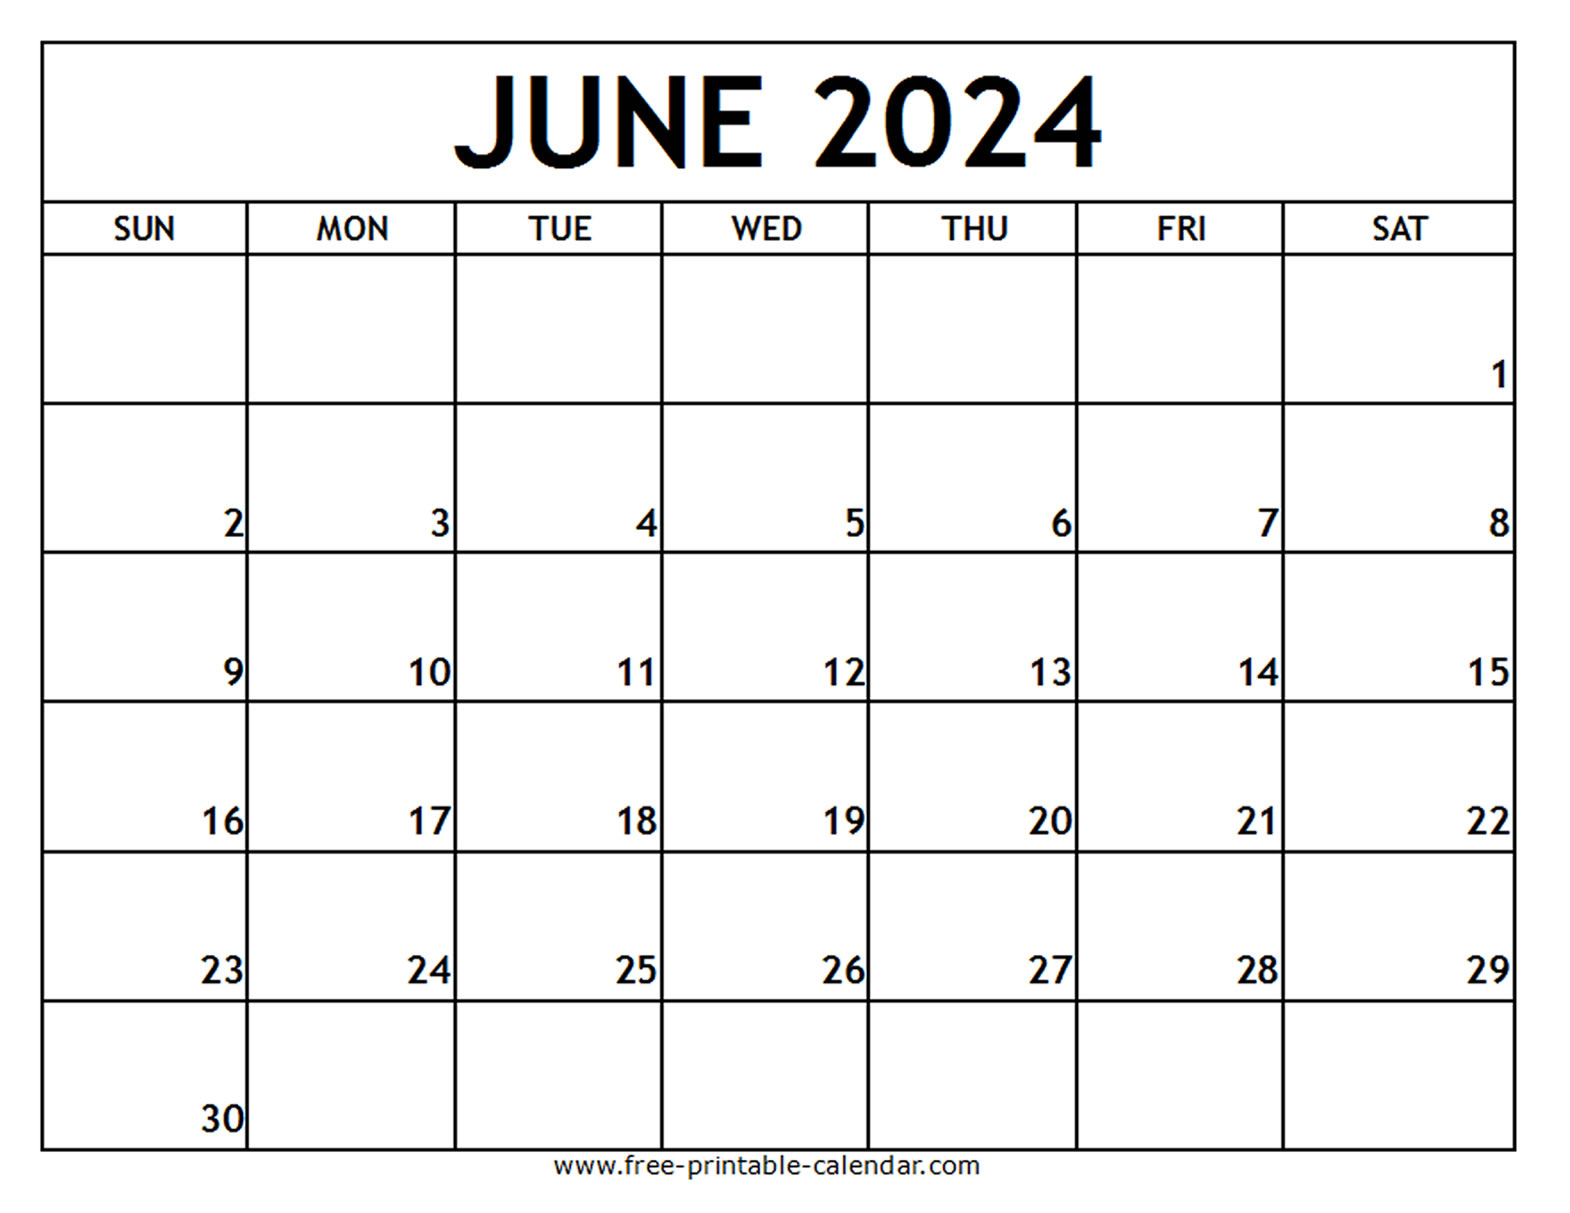 June 2024 Printable Calendar - Free-Printable-Calendar | June 2024 Free Printable Calendar